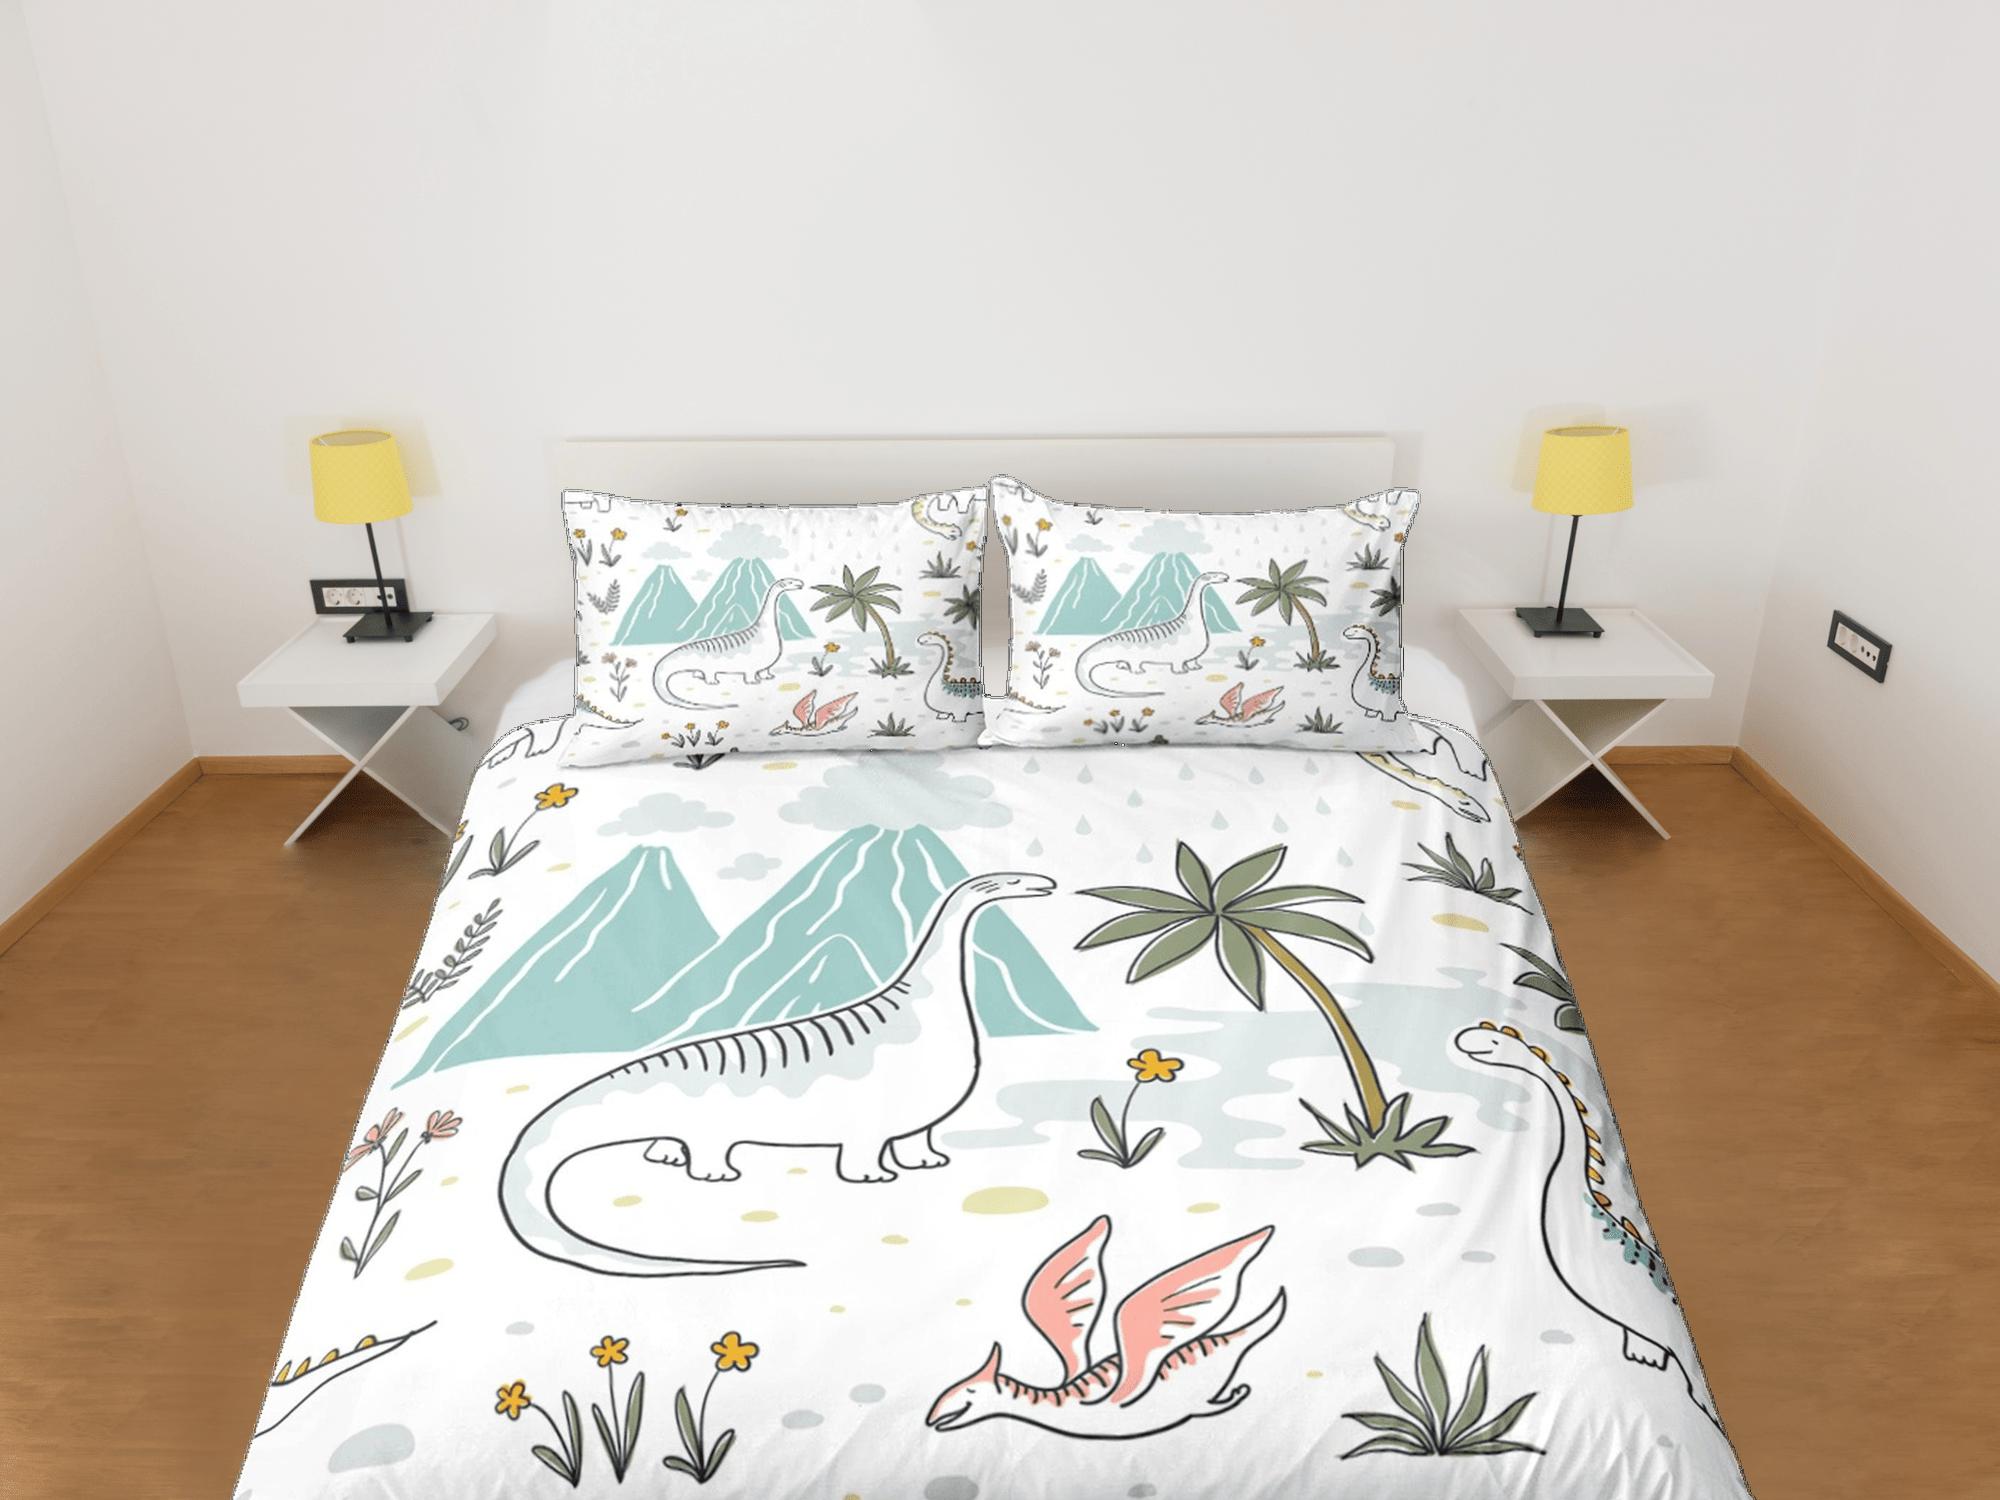 daintyduvet Cute dinosaur bedding, kids bedding full, crib duvet cover set, dinosaur nursery bed decor, colorful bedding, baby dinosaur, toddler bedding